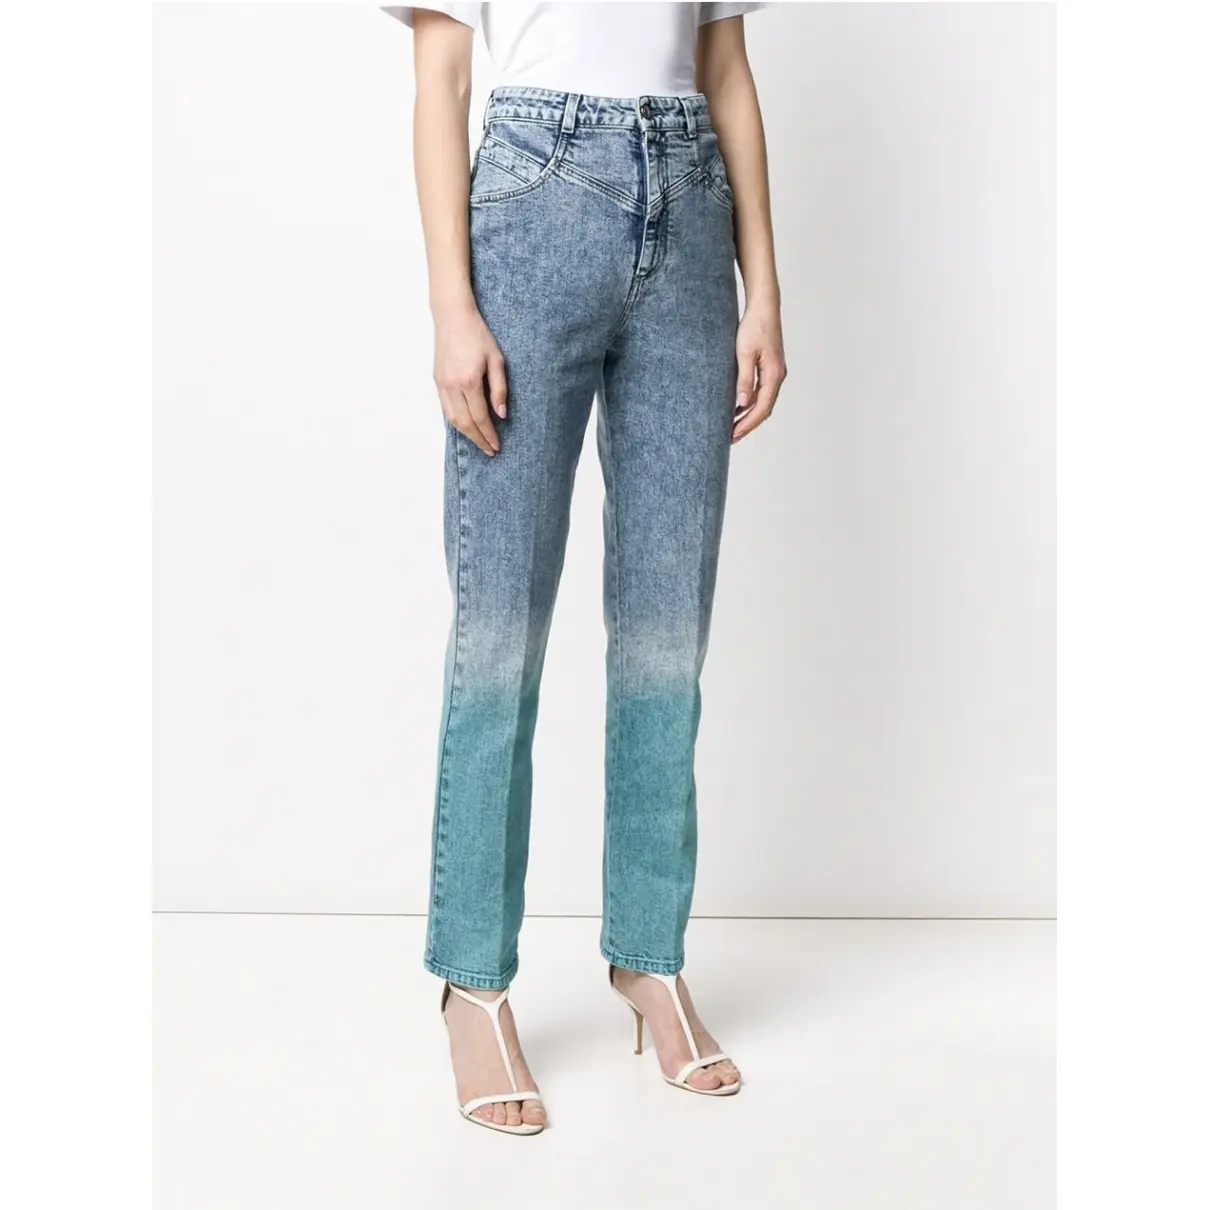 Stella McCartney Straight jeans for sale